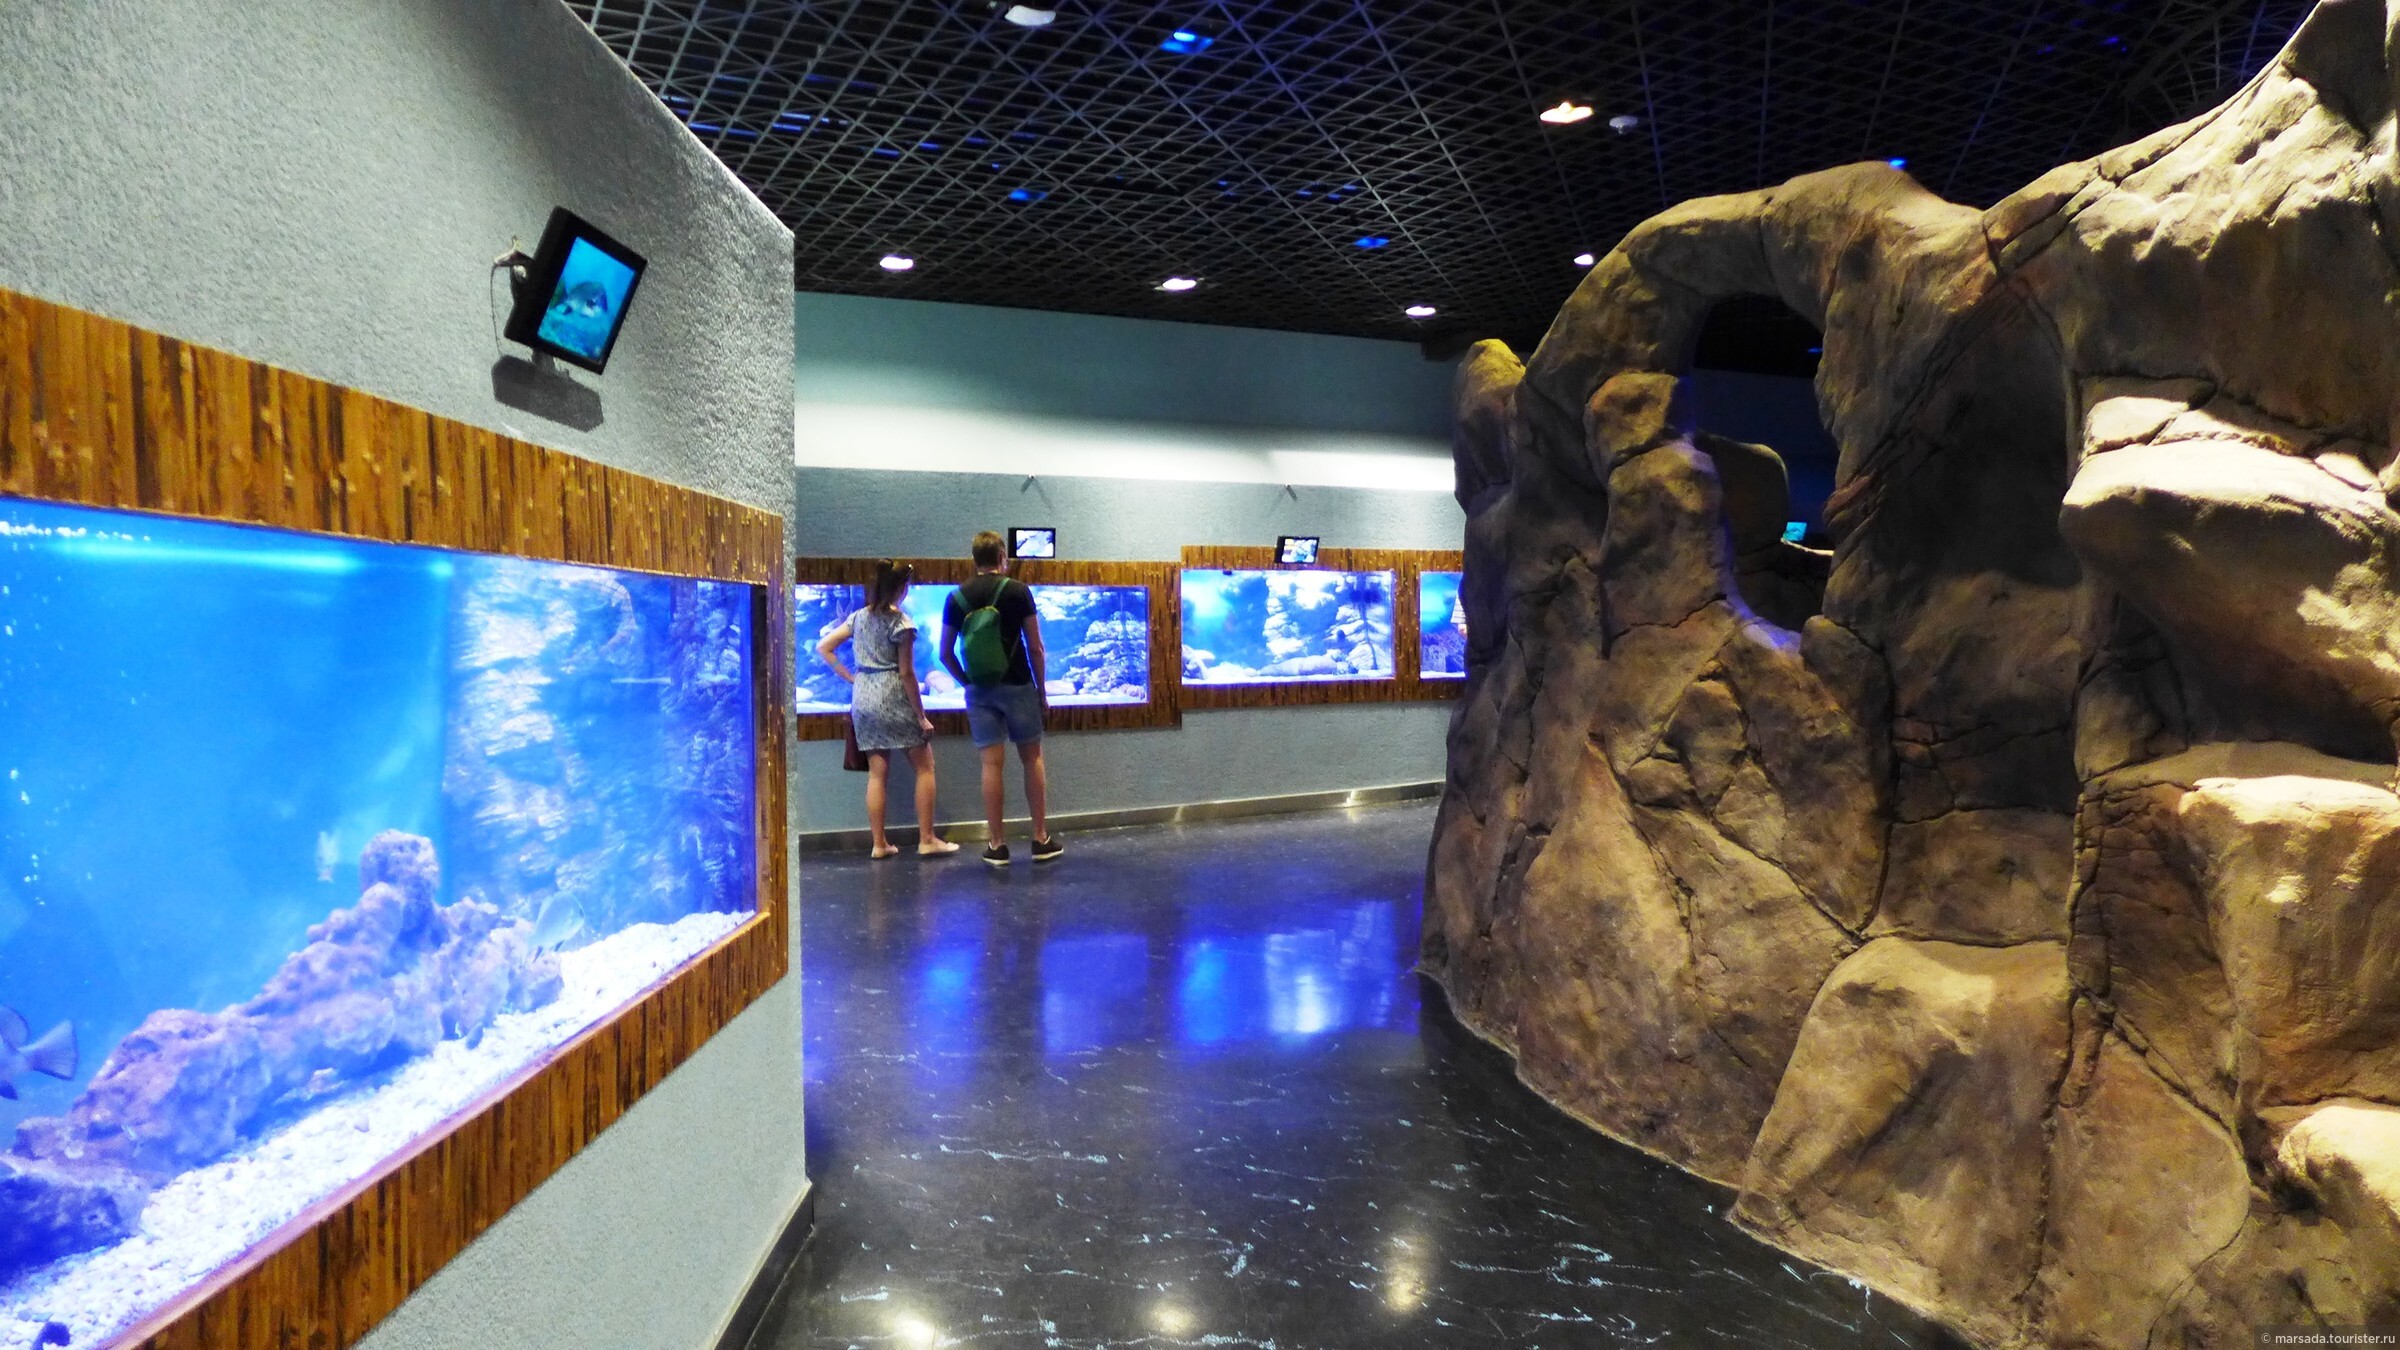 Aquaria цена. Океанариум Вегас Мякинино. Крокус аквариум. Аквариум Вегас Крокус Сити. Океанариум в ТЦ Вегас.